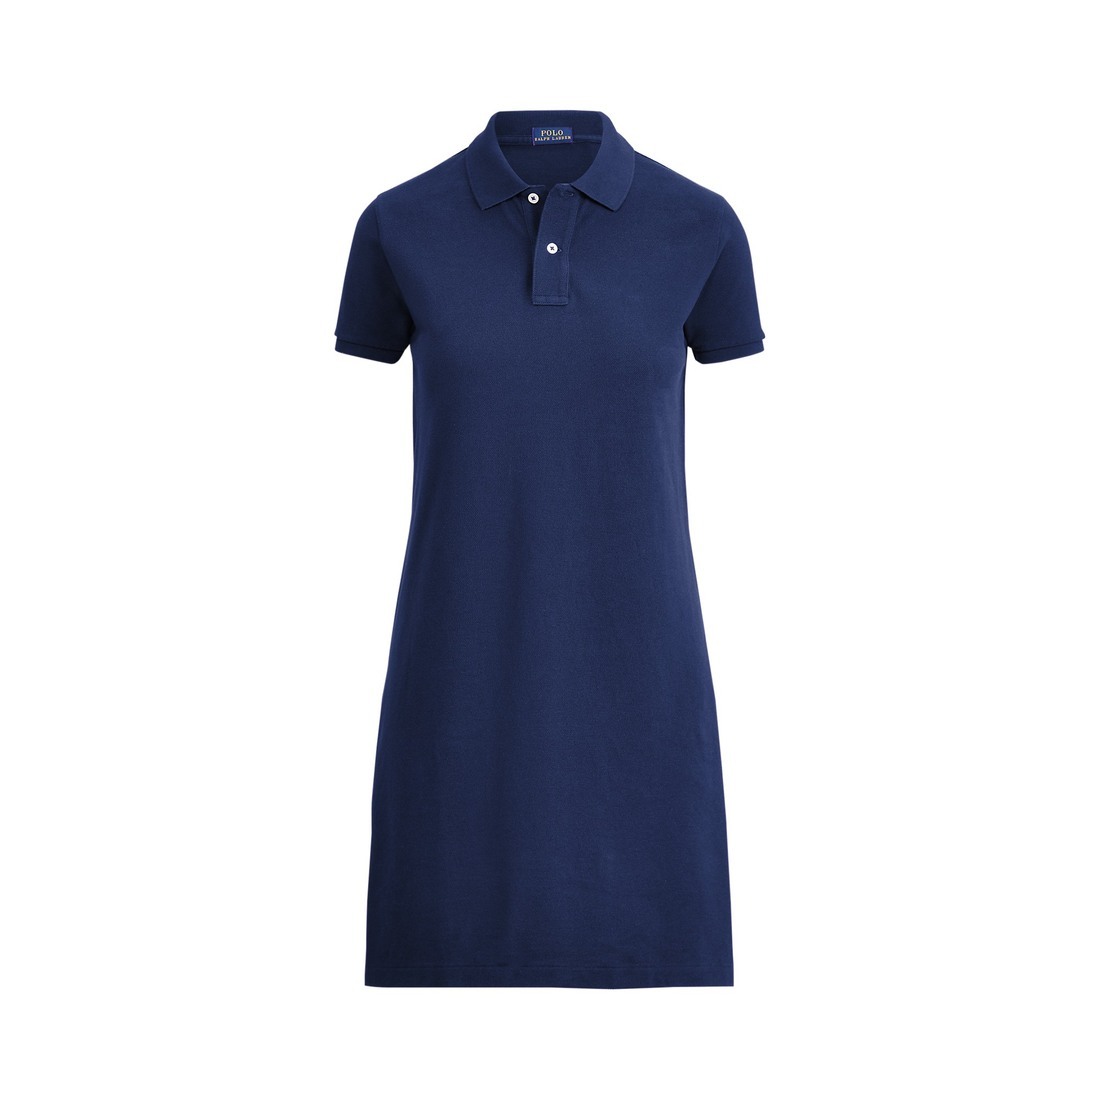 Polo Ralph Lauren PIMA - Polo shirt - french navy/dark blue